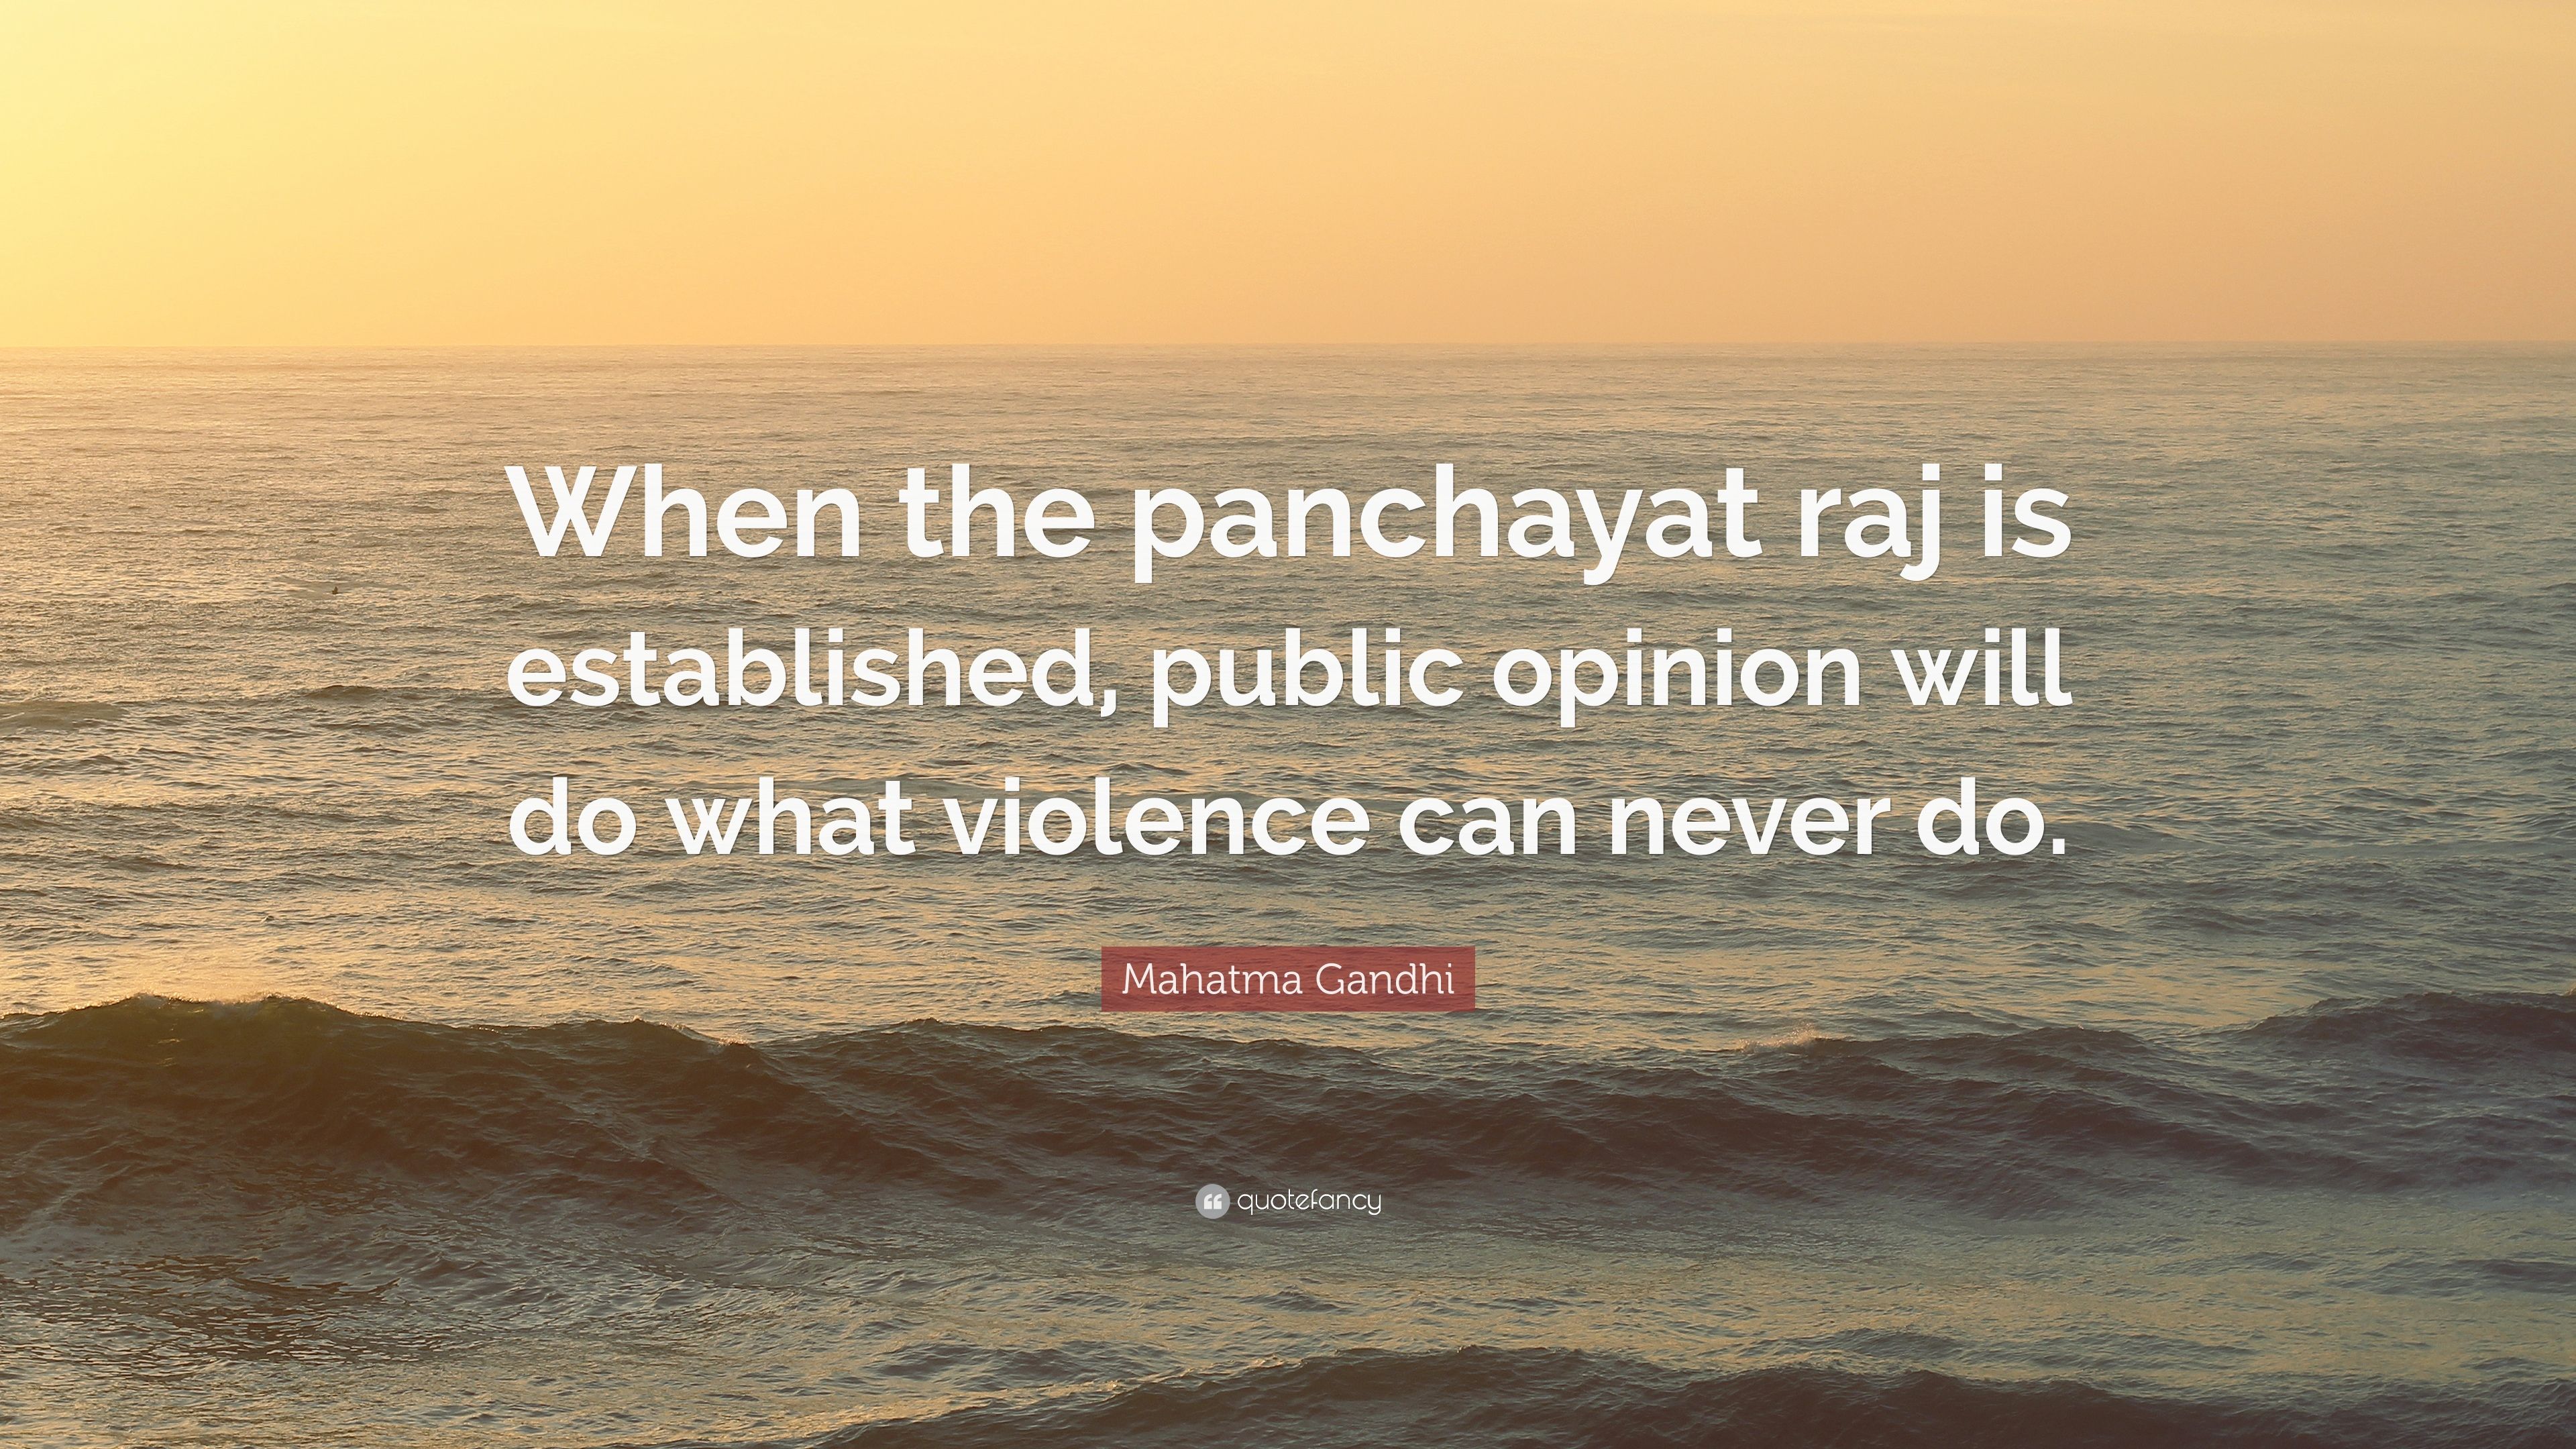 Mahatma Gandhi Quote: “When the panchayat raj is established